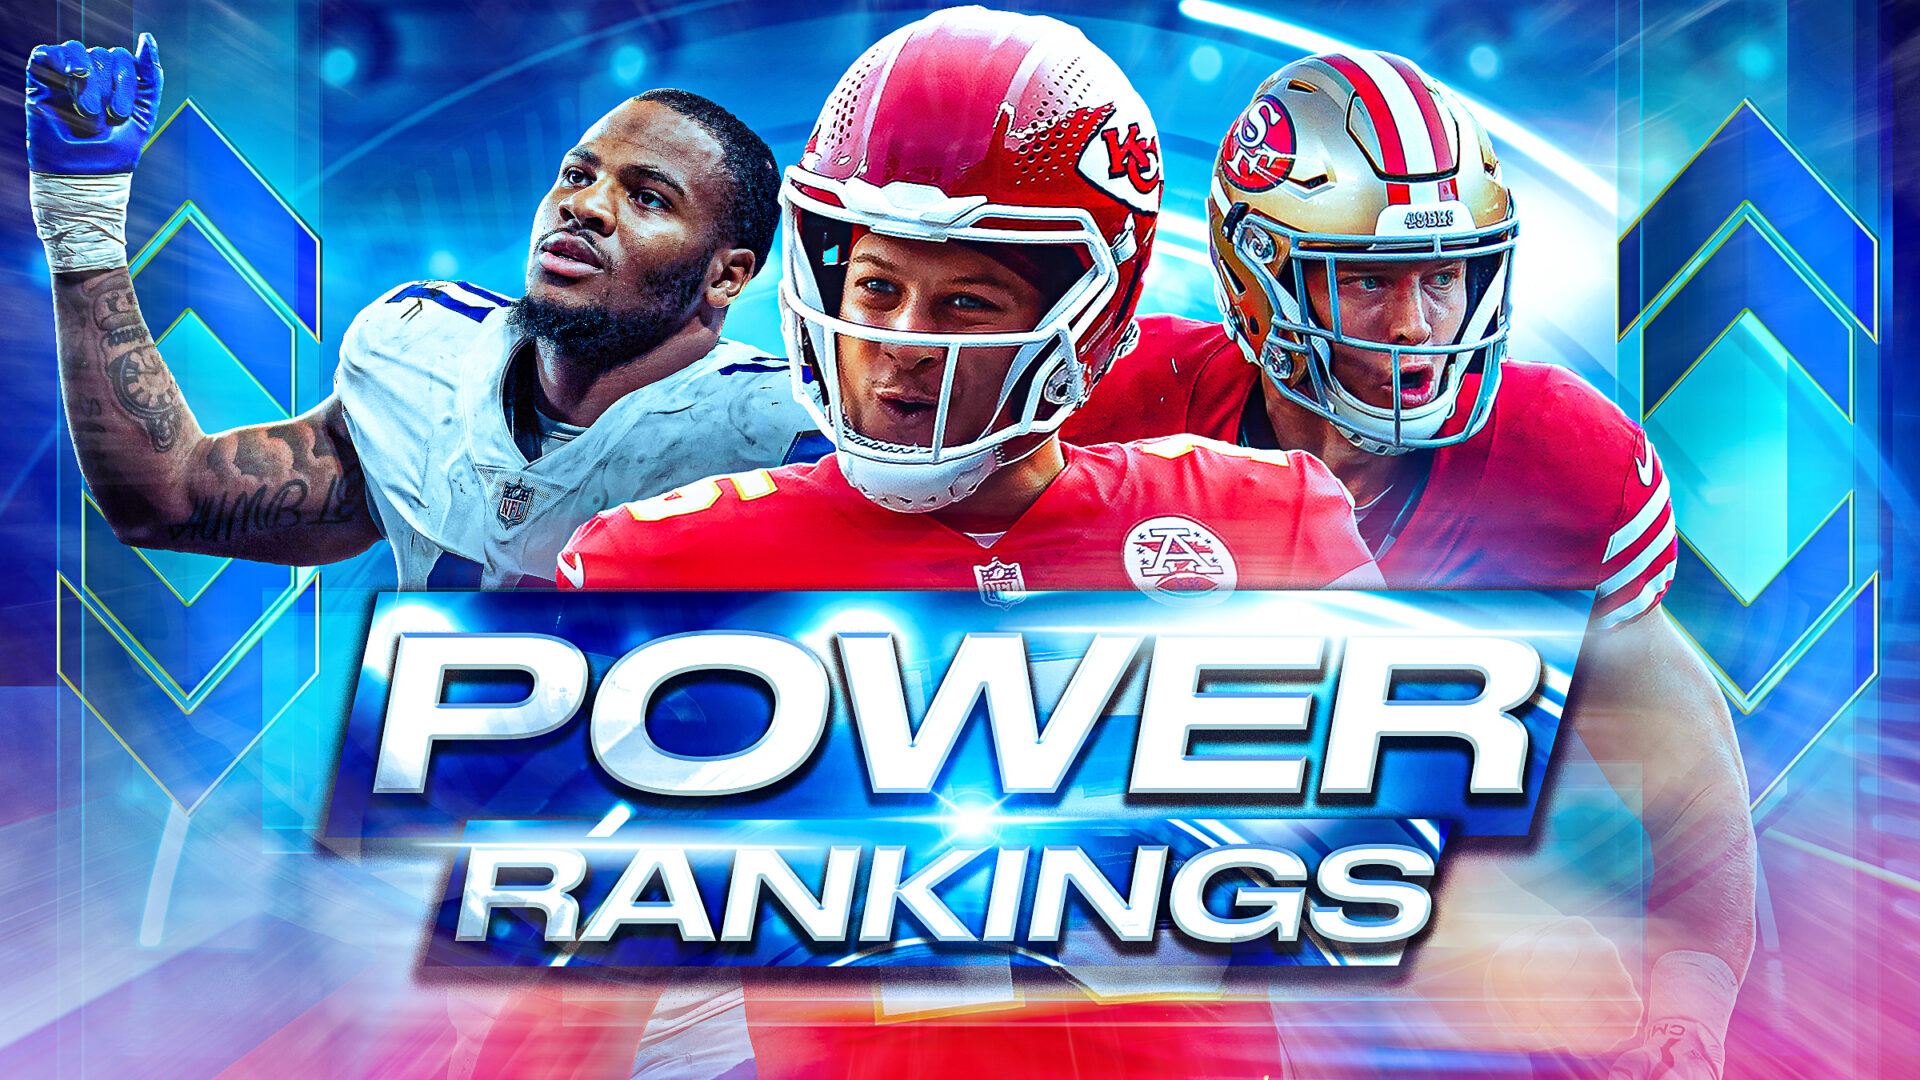 NFL power rankings: 49ers, Seahawks surge as NFC contenders